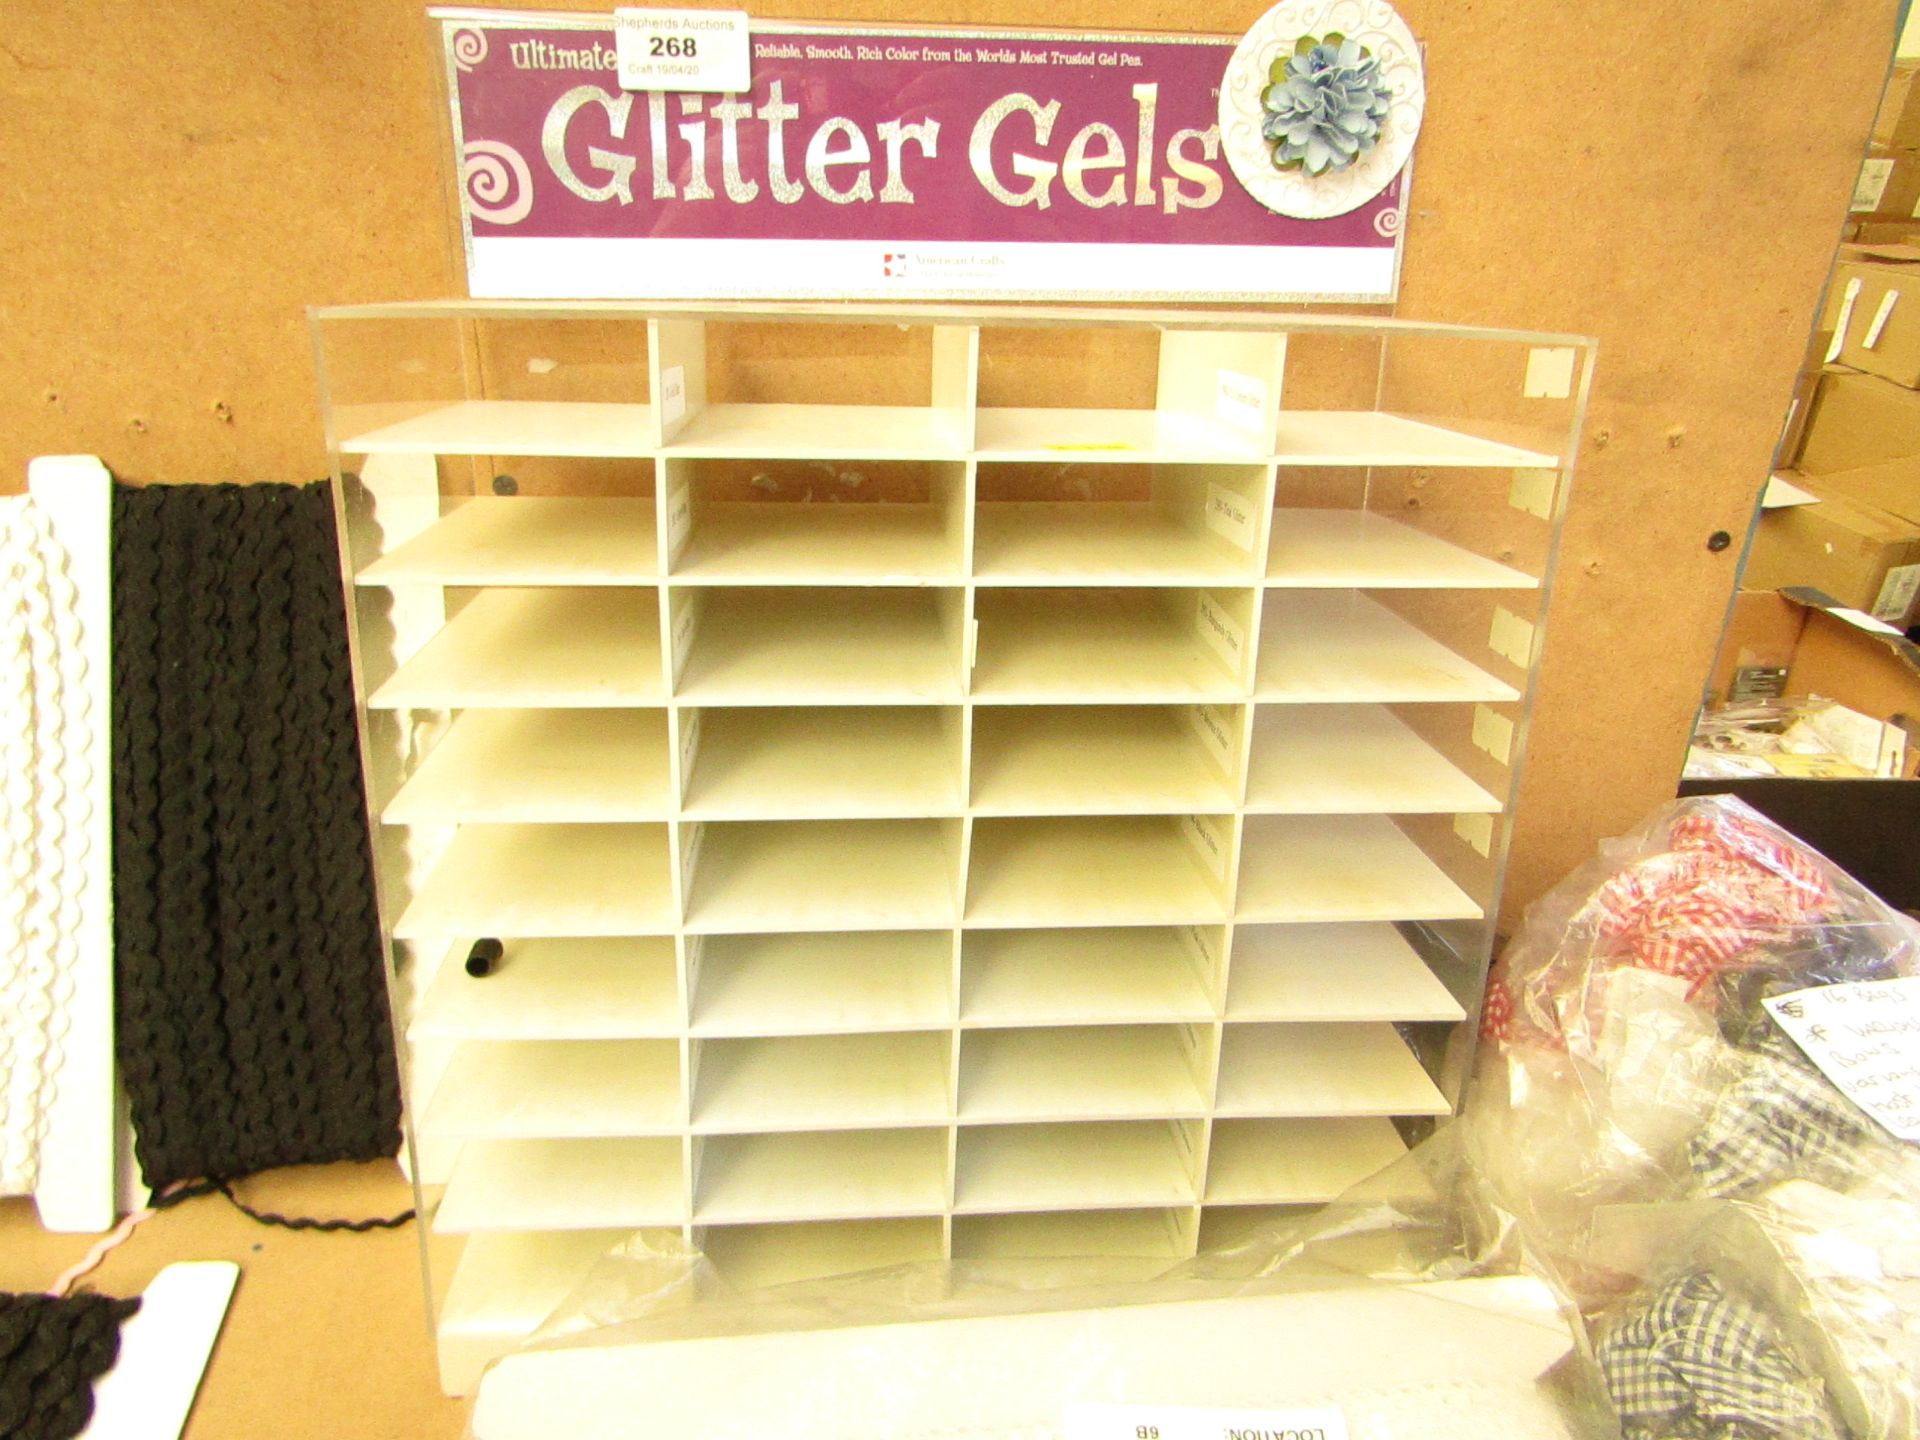 Glitter Gels storage rack, new.